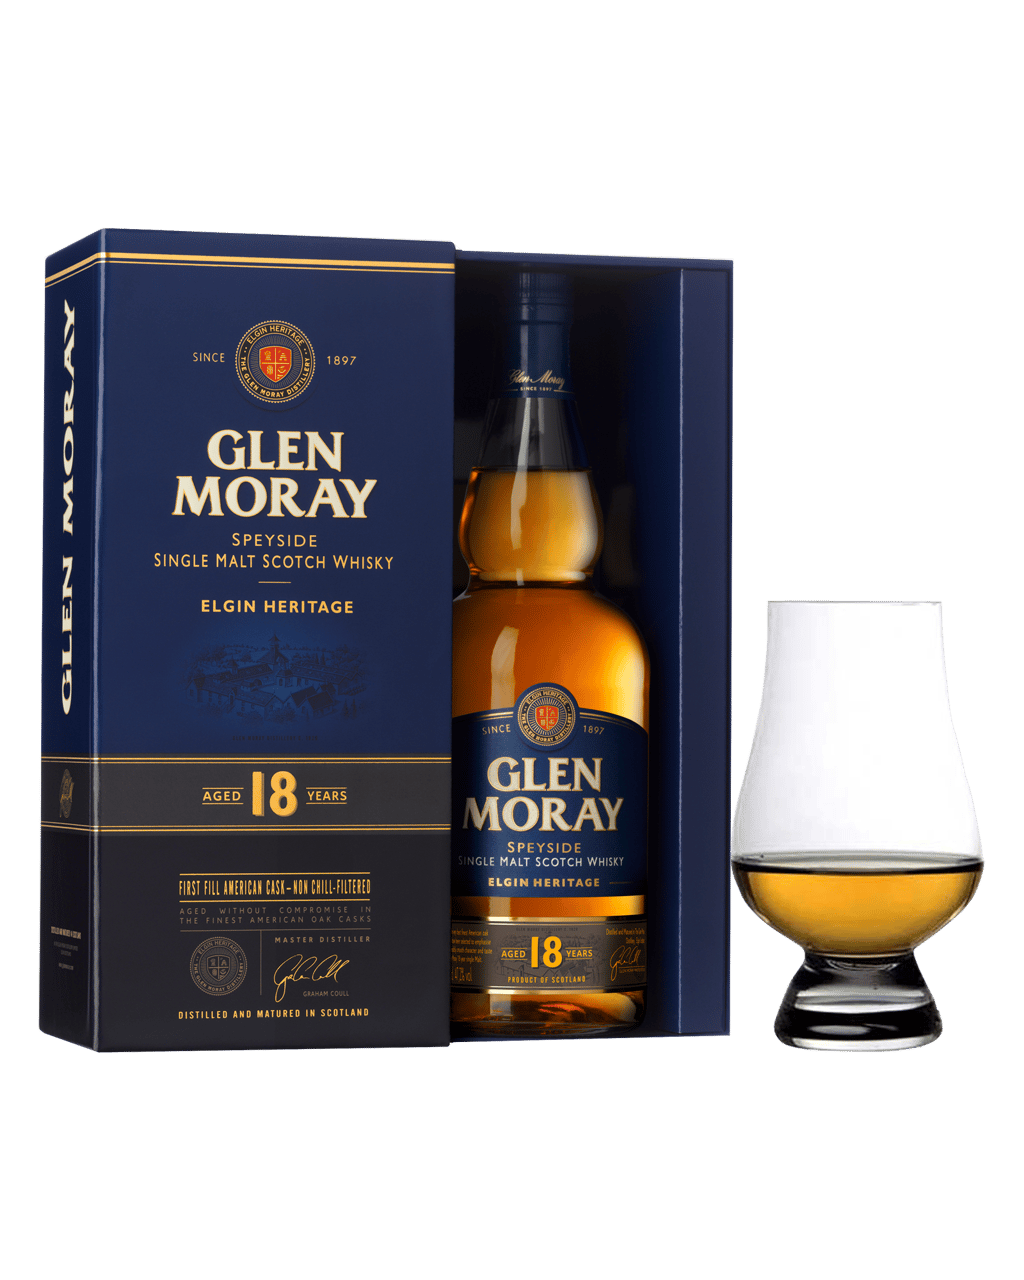 GLEN MORAY GLENCAIRN SINGLE MALT SCOTCH TASTING GLASS 